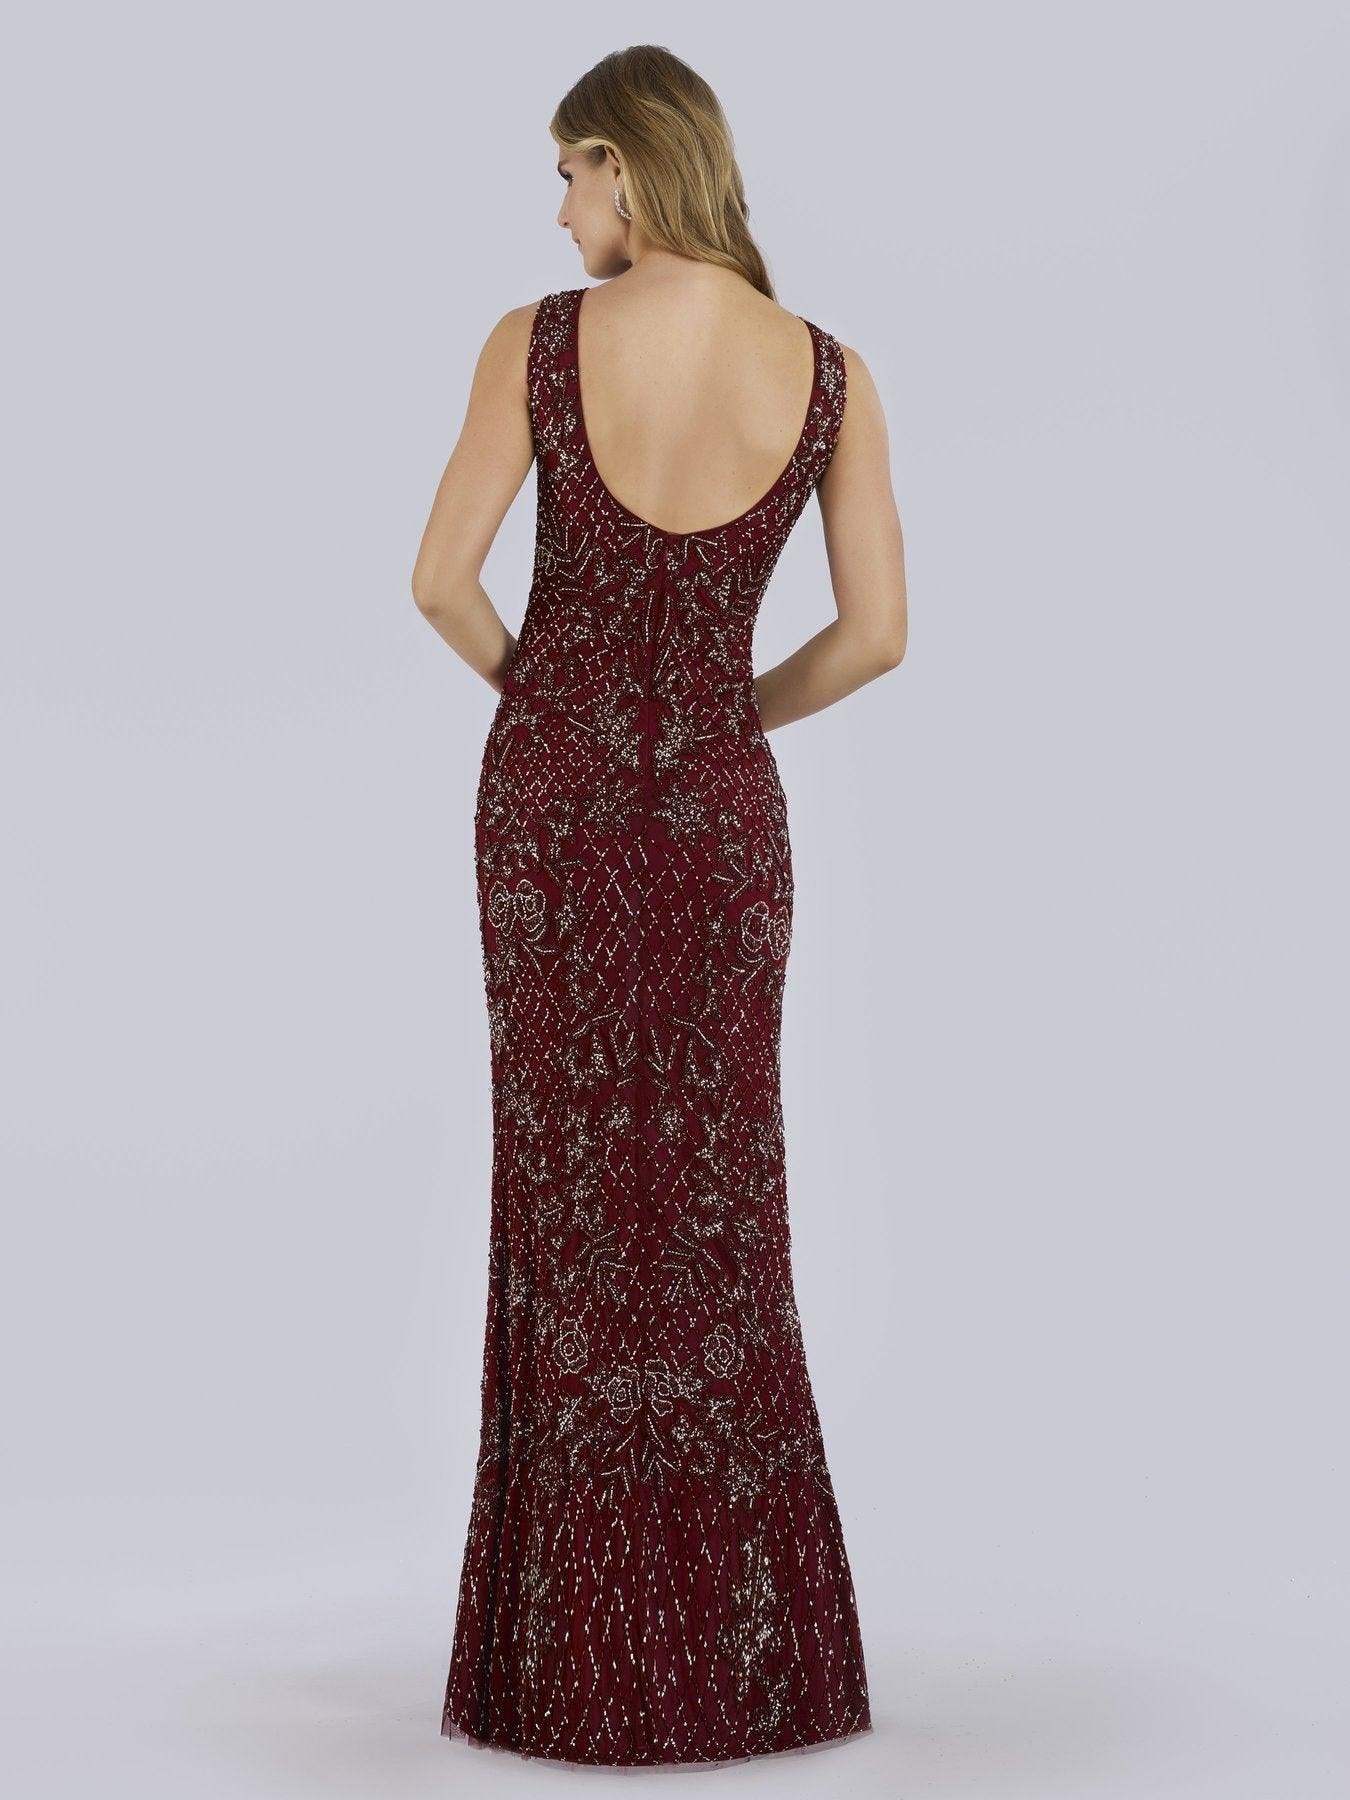 Lara Dresses Sleeveless Long Prom Dress 29818 - The Dress Outlet